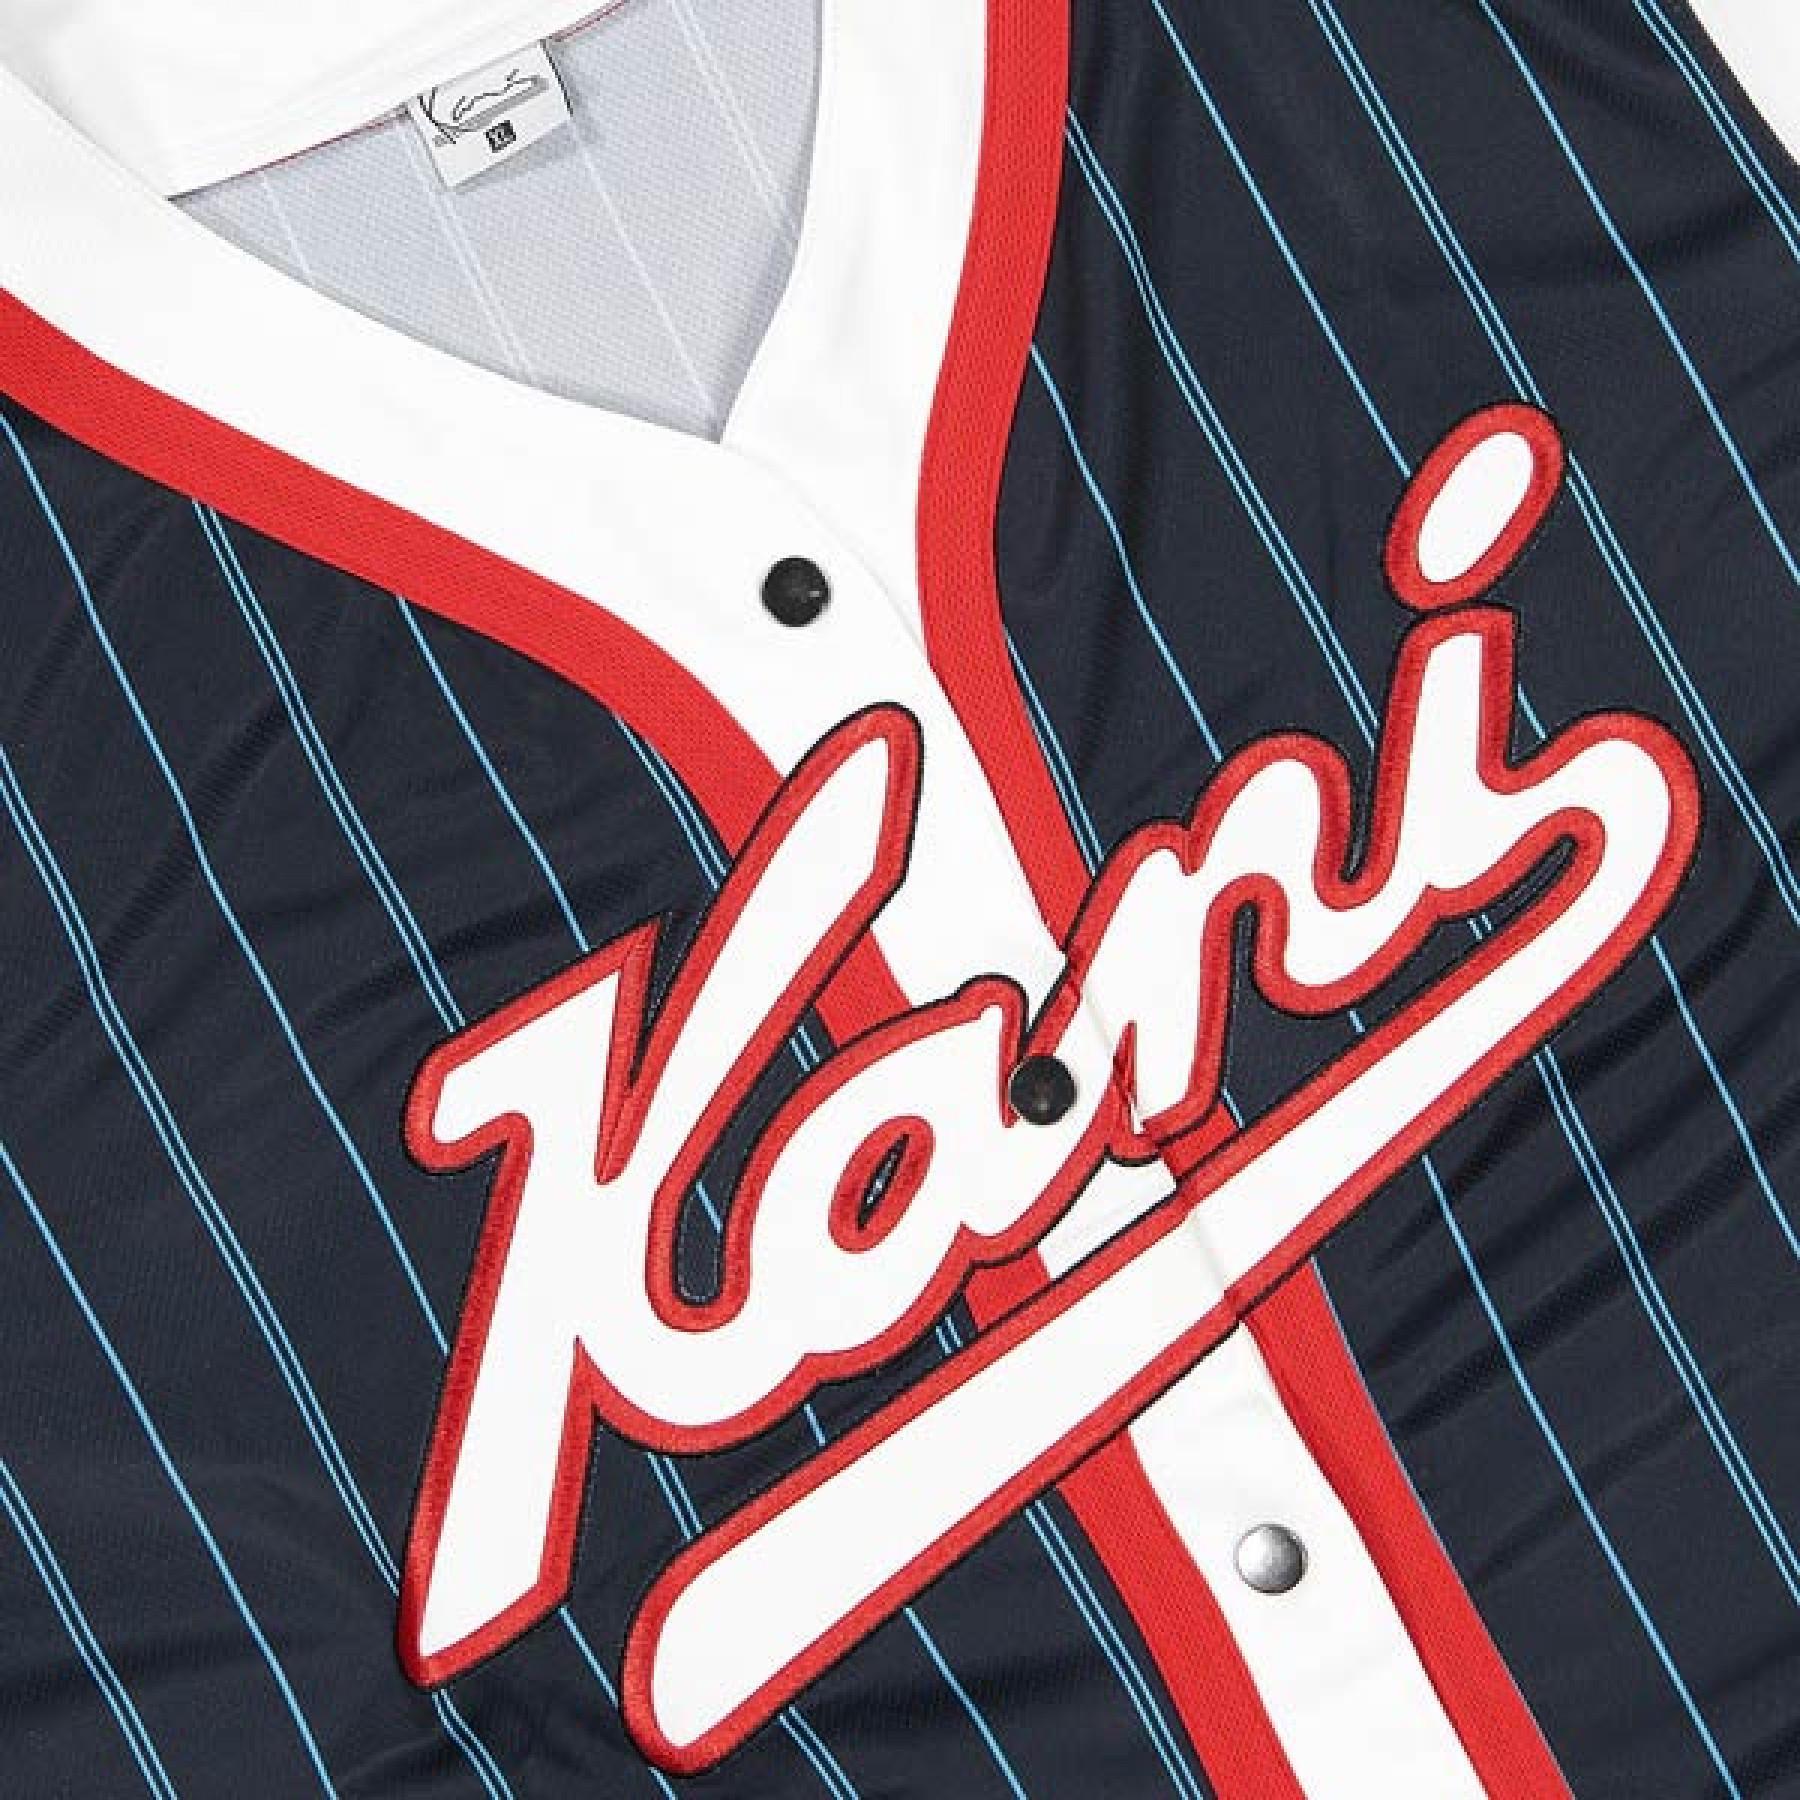 Koszulka Karl Kani Varsity Block Pinstripe Baseball